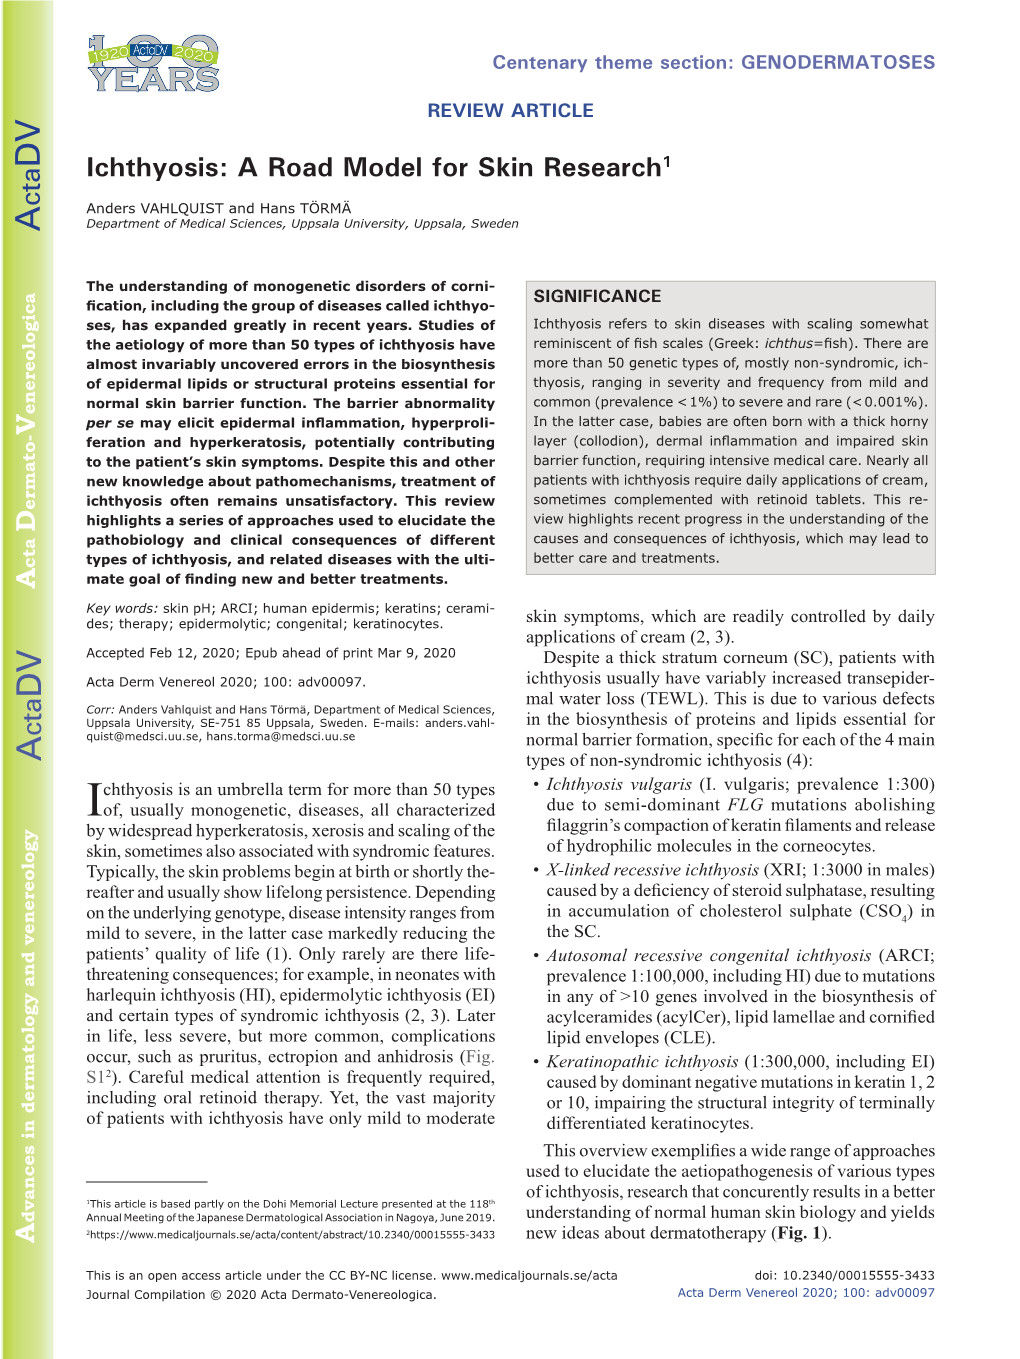 Ichthyosishaveonlymildtomoderate Including Oral Retinoid Therapy